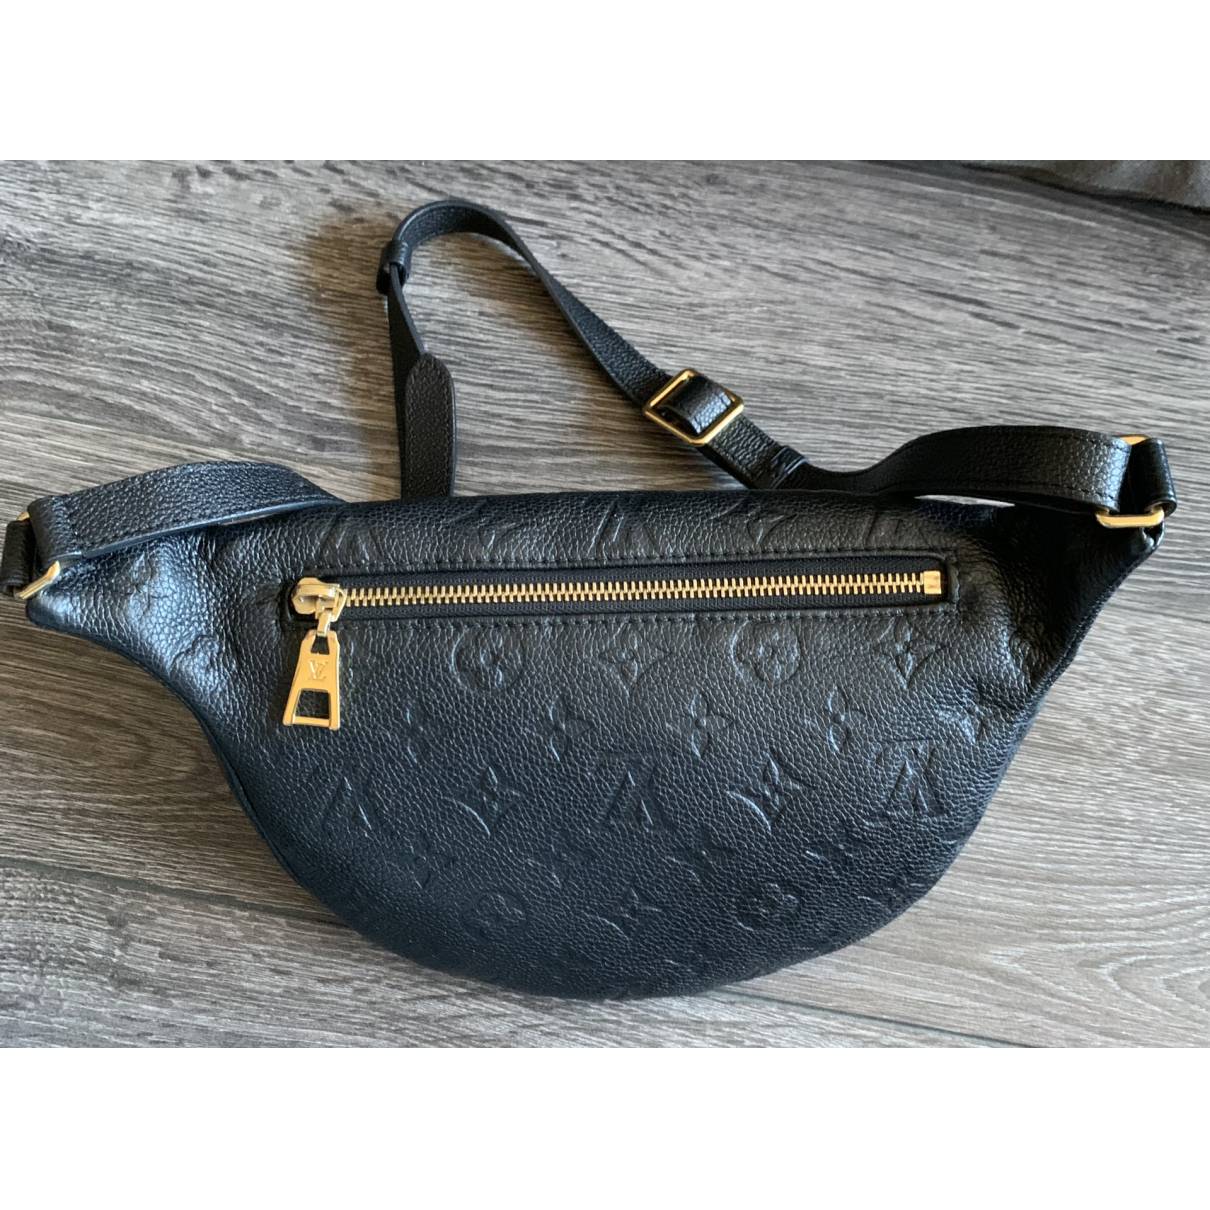 Bum bag / sac ceinture leather bag Louis Vuitton Black in Leather - 35180341